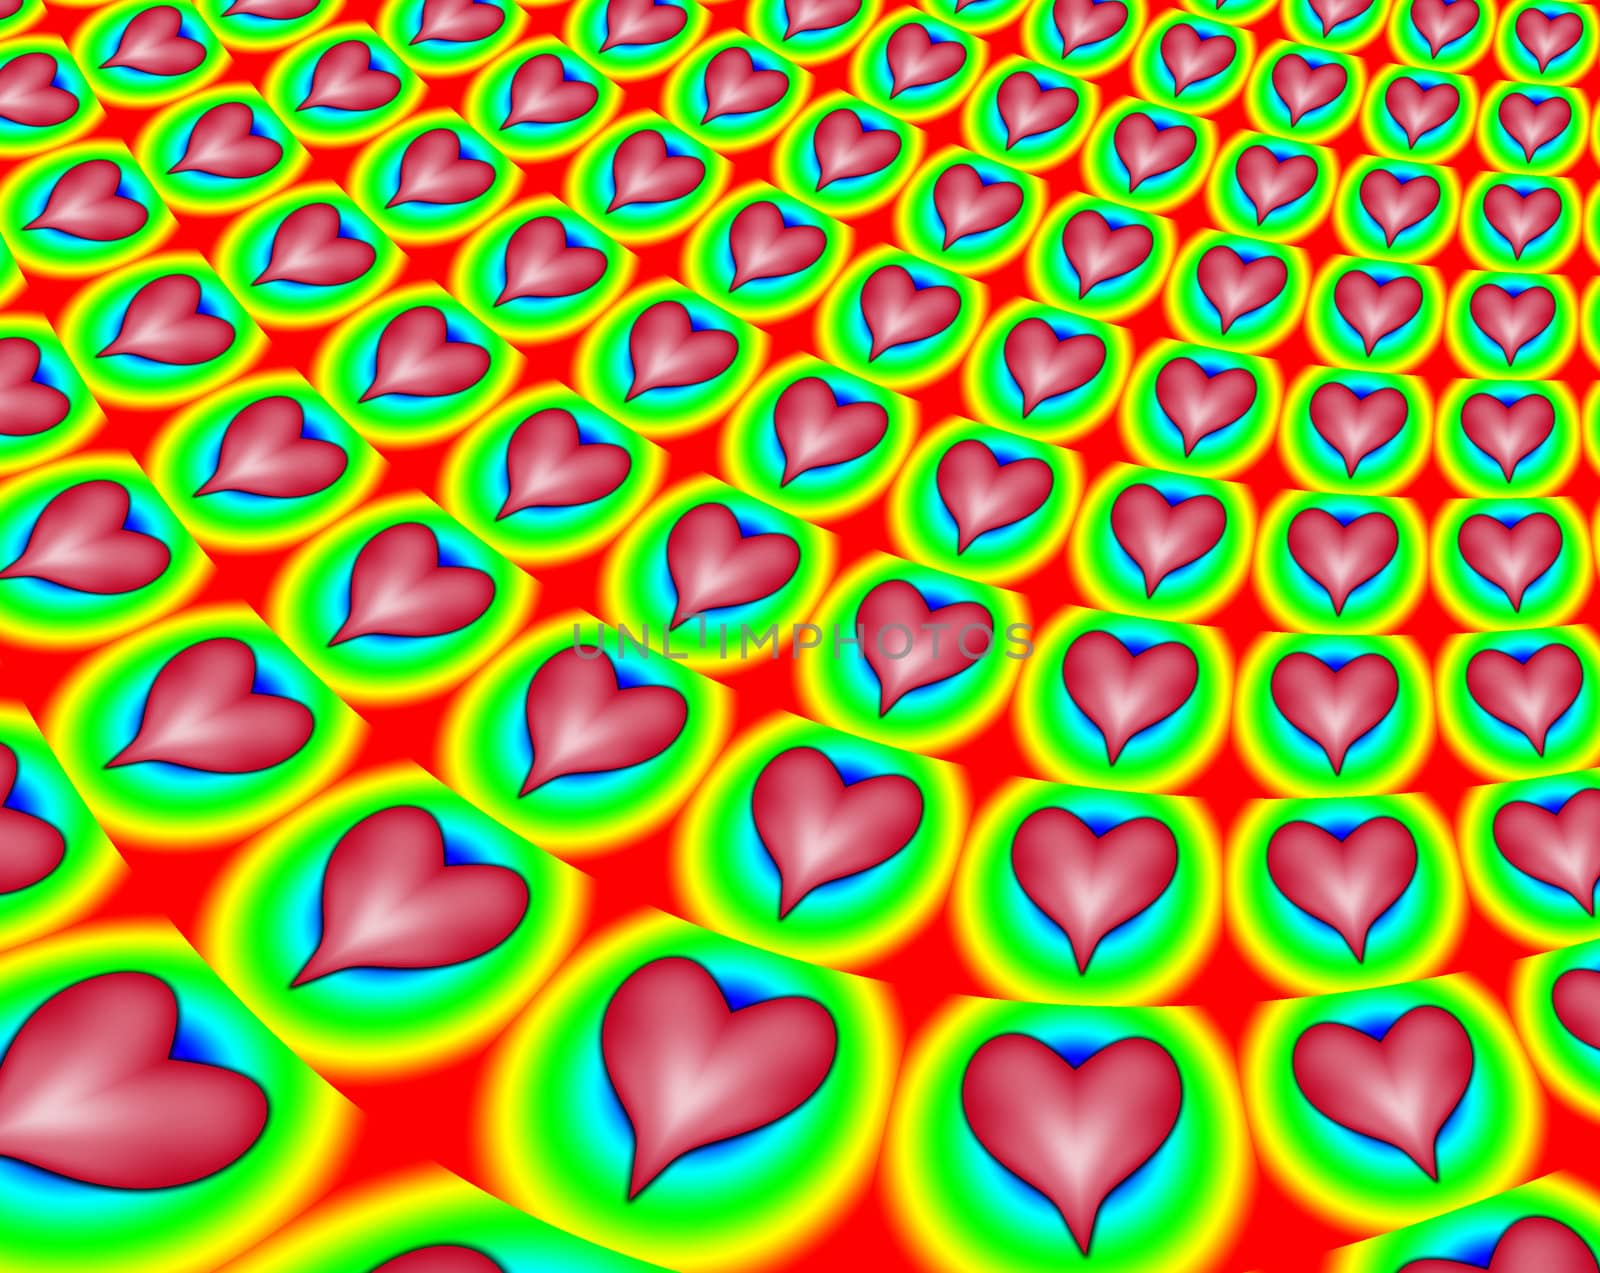 Fractal Hearts  by harveysart